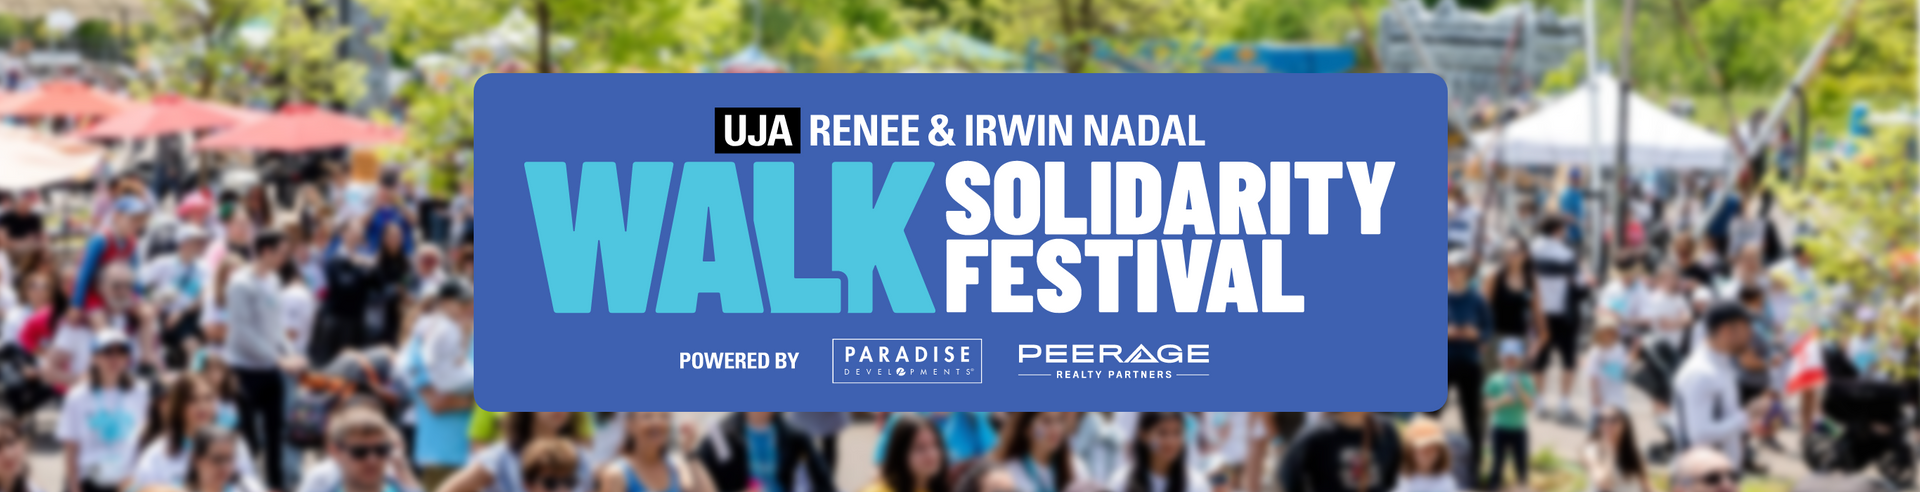 Walk Solidarity Festival